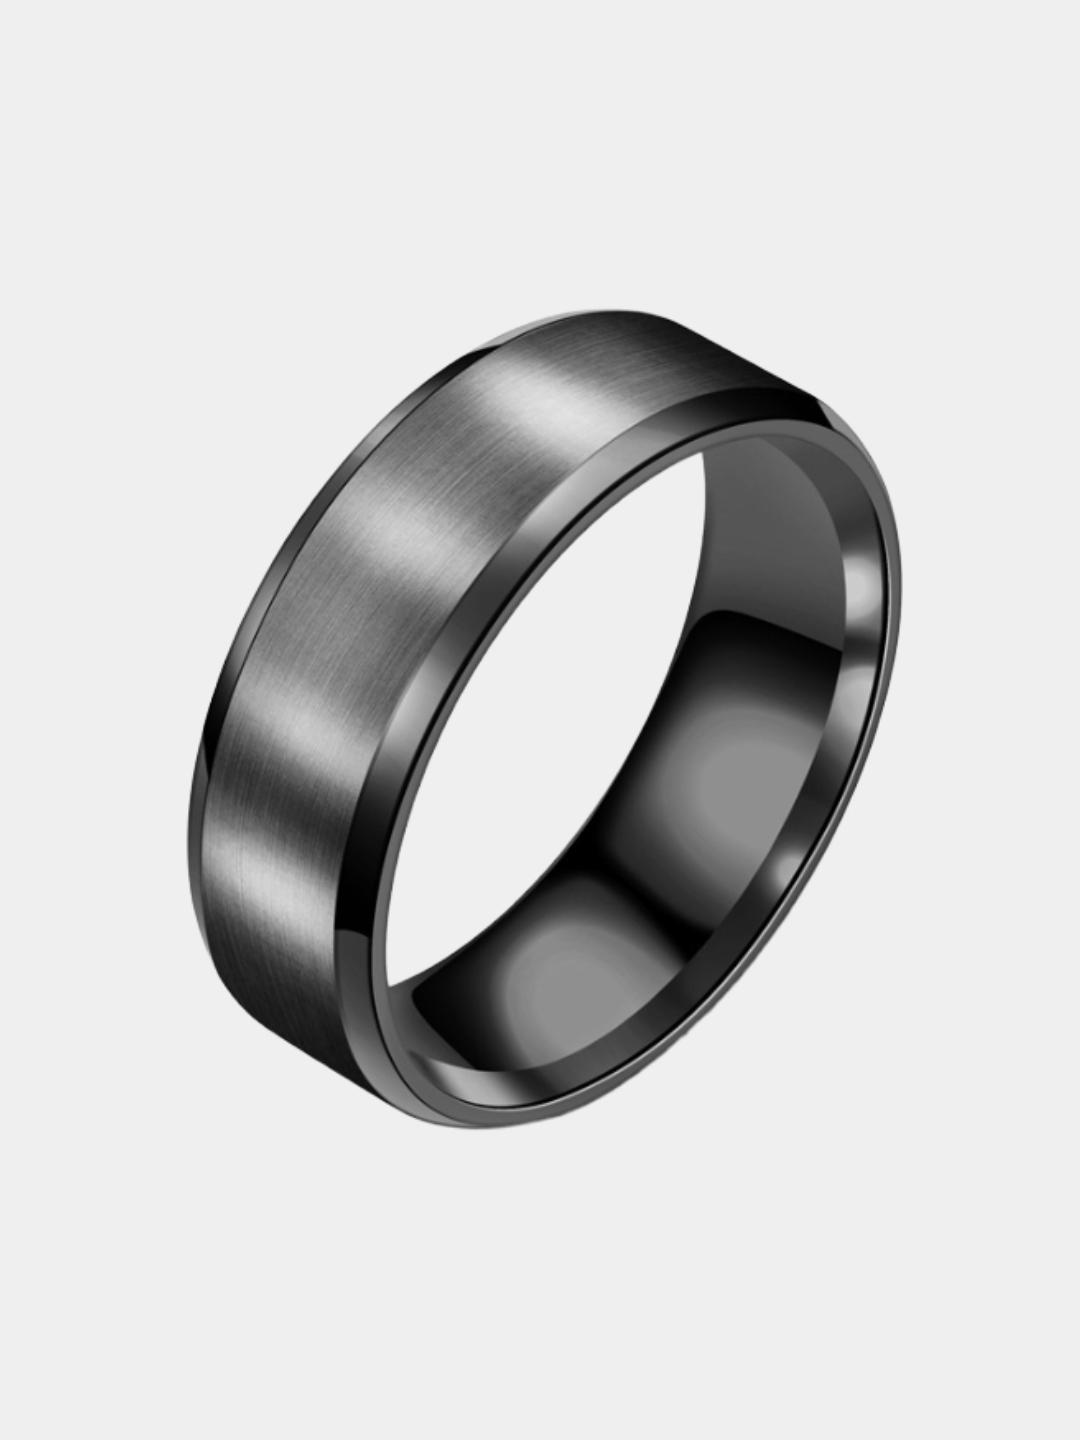 Stainless Steel кольцо мужское. Кольцо нержавеющая сталь 8мм. Tokyo Revengers кольцо. Титановые кольца. Титановое кольцо купить